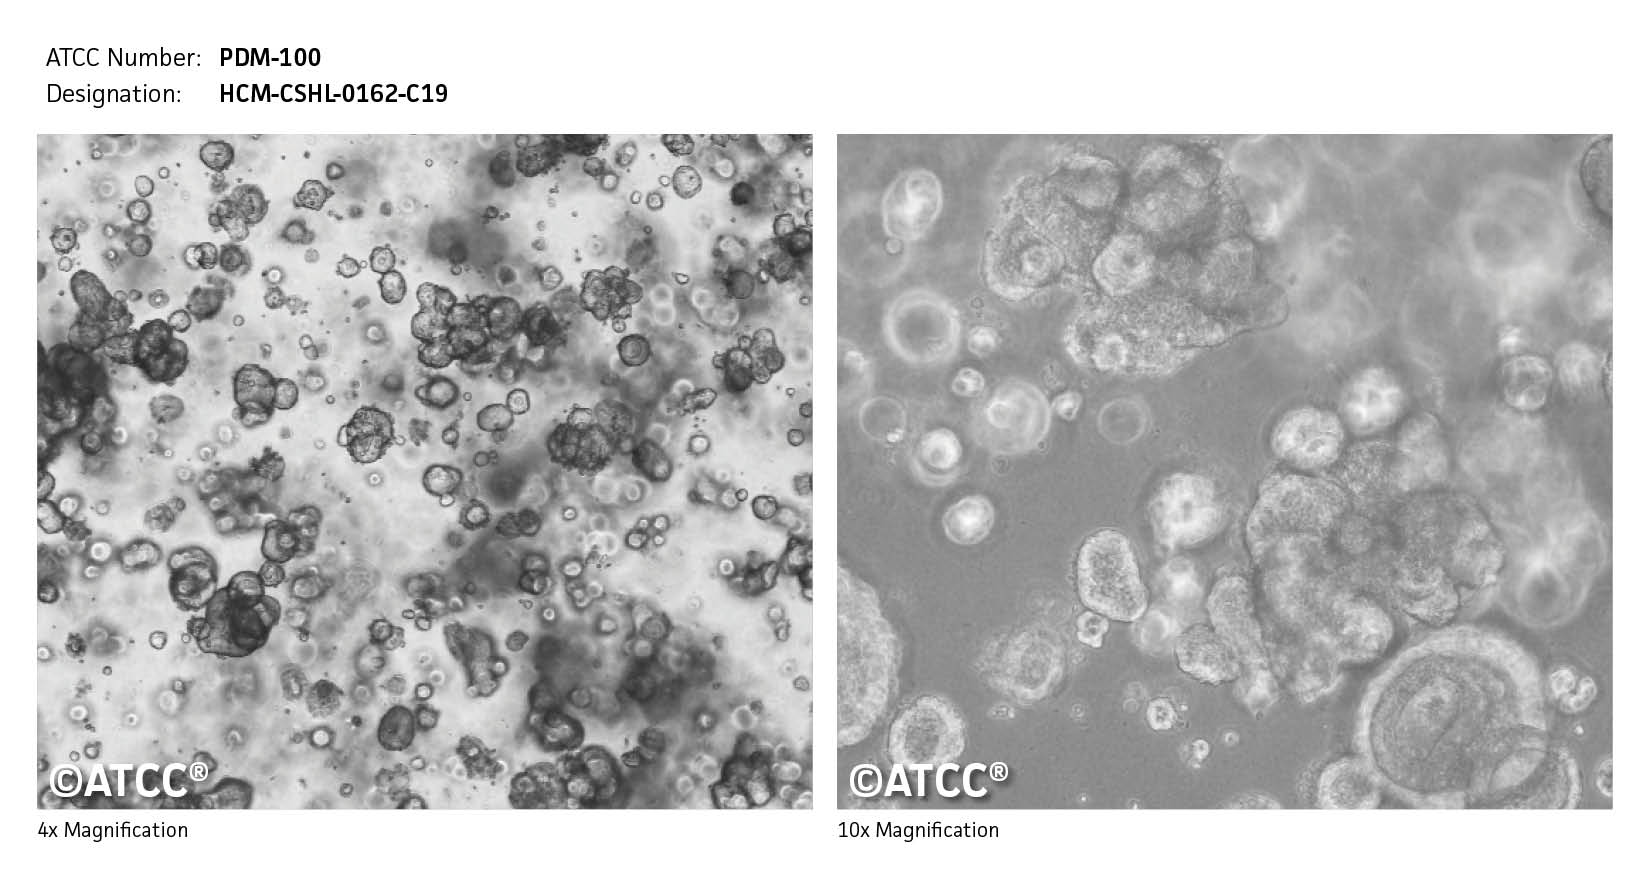 ATCC PDM-100 Cell Micrograph